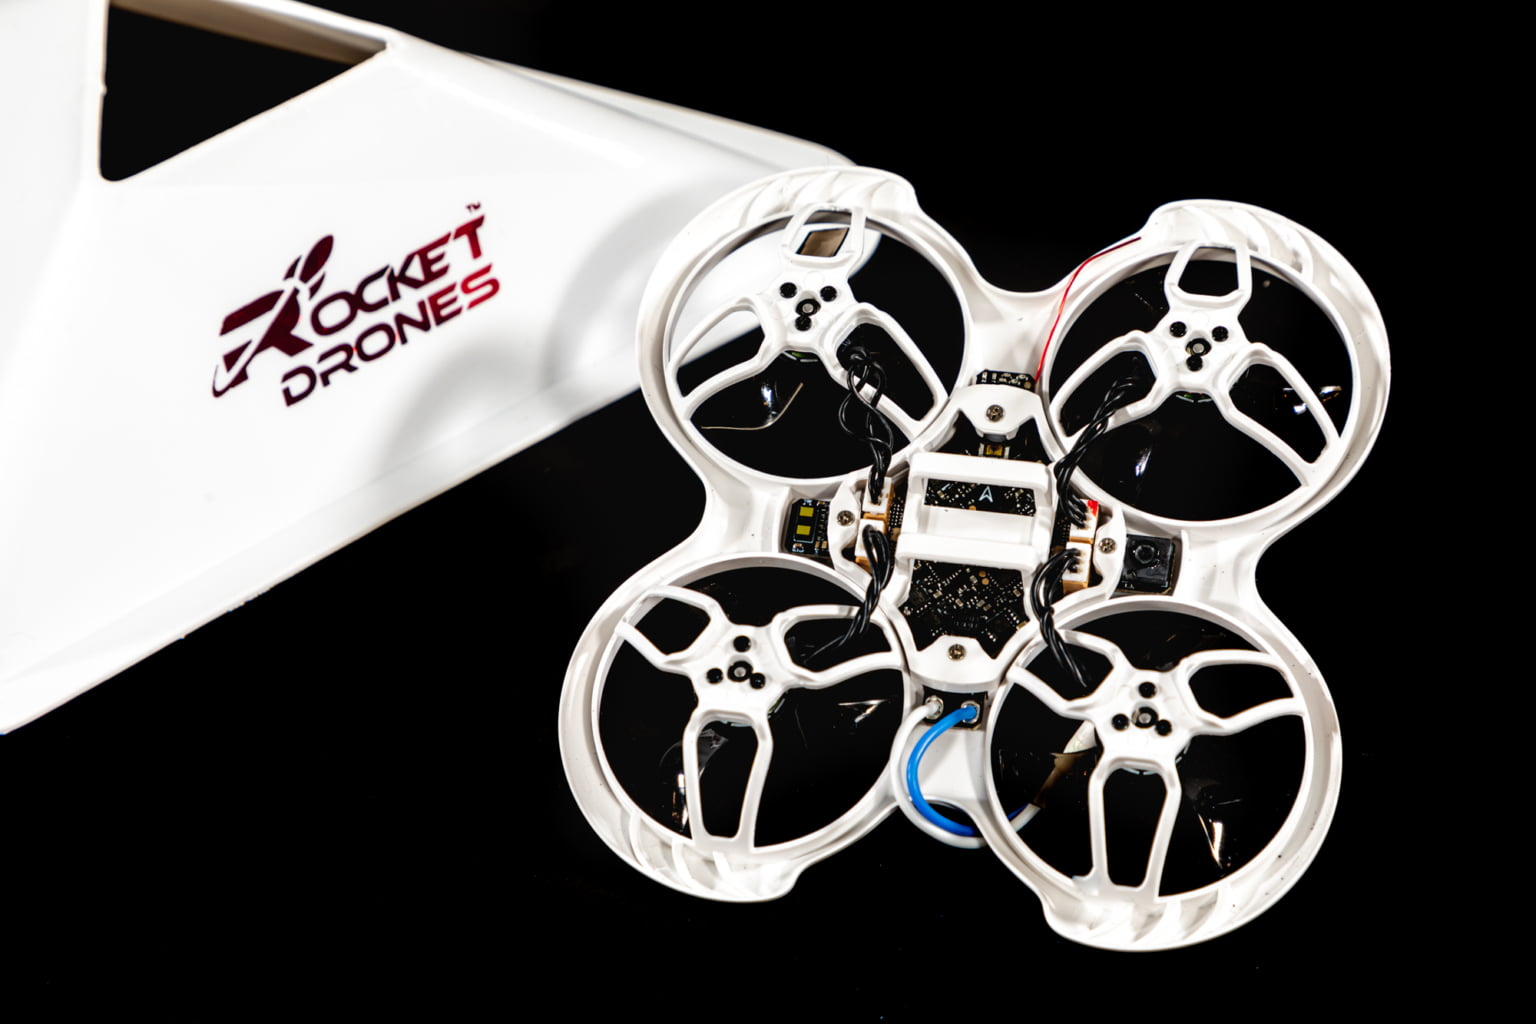 Rocket Drones Products